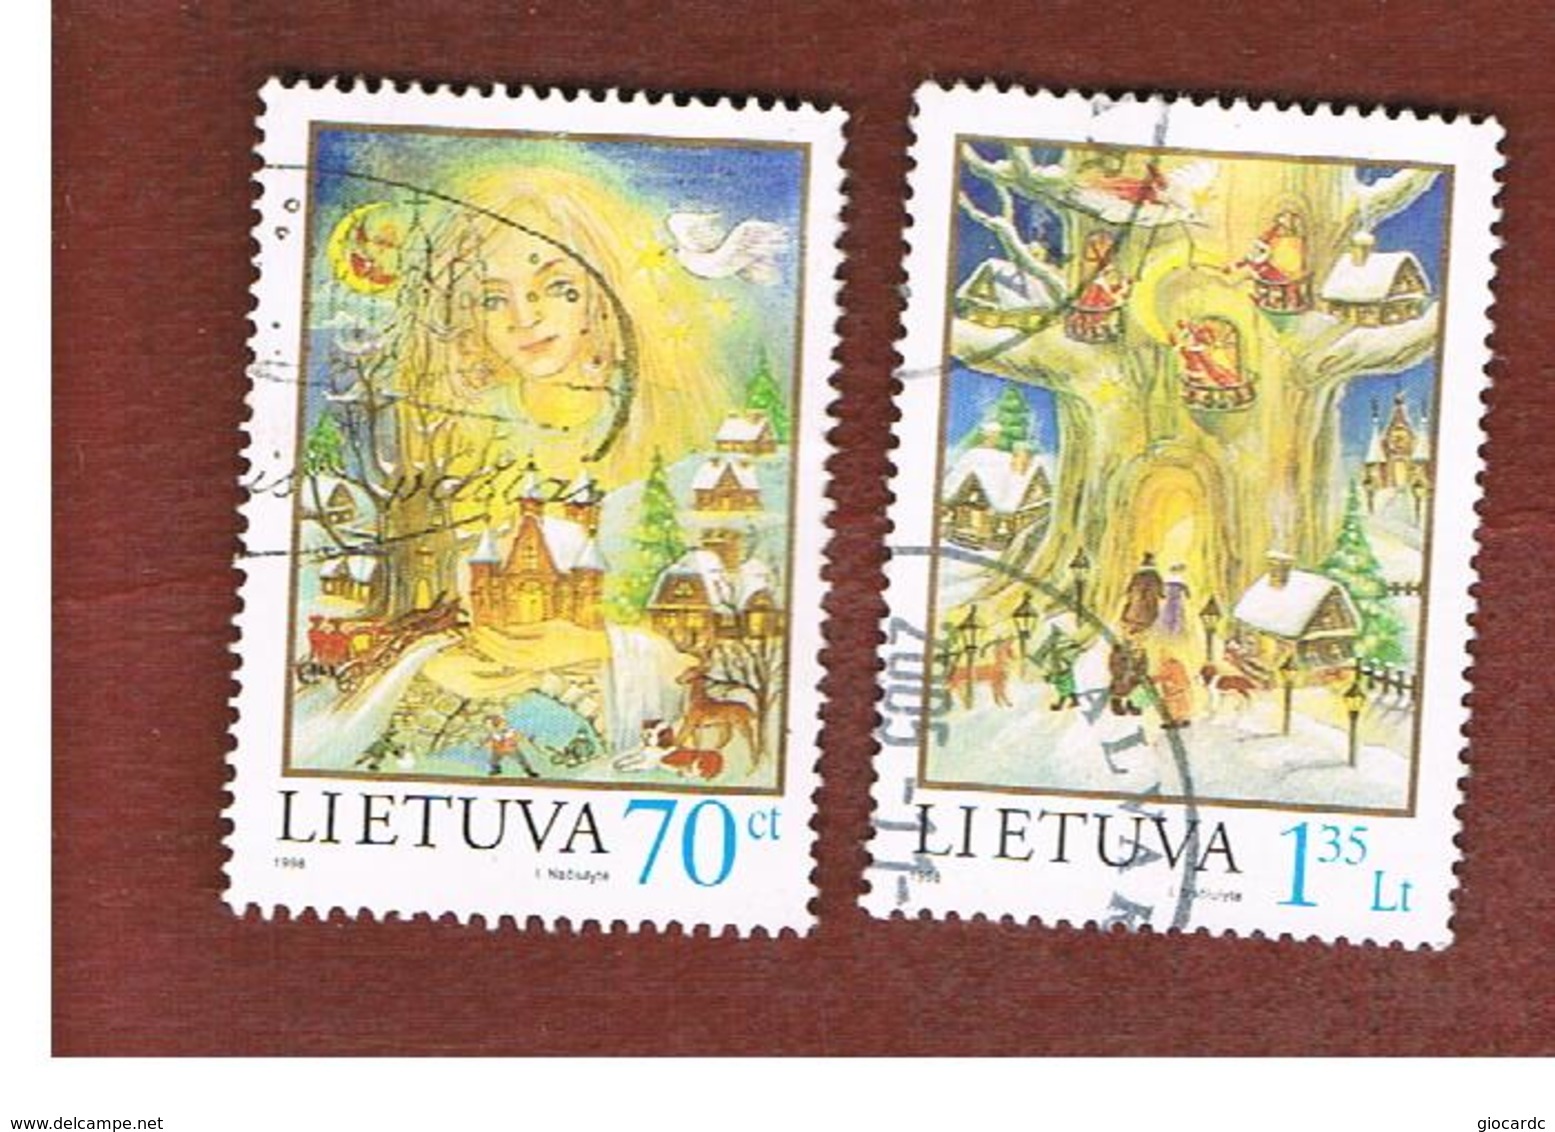 LITUANIA (LITHUANIA)   - SG  689.690  -        1998 CHRISTMAS (COMPLET SET OF 2)   -   USED - Lithuania